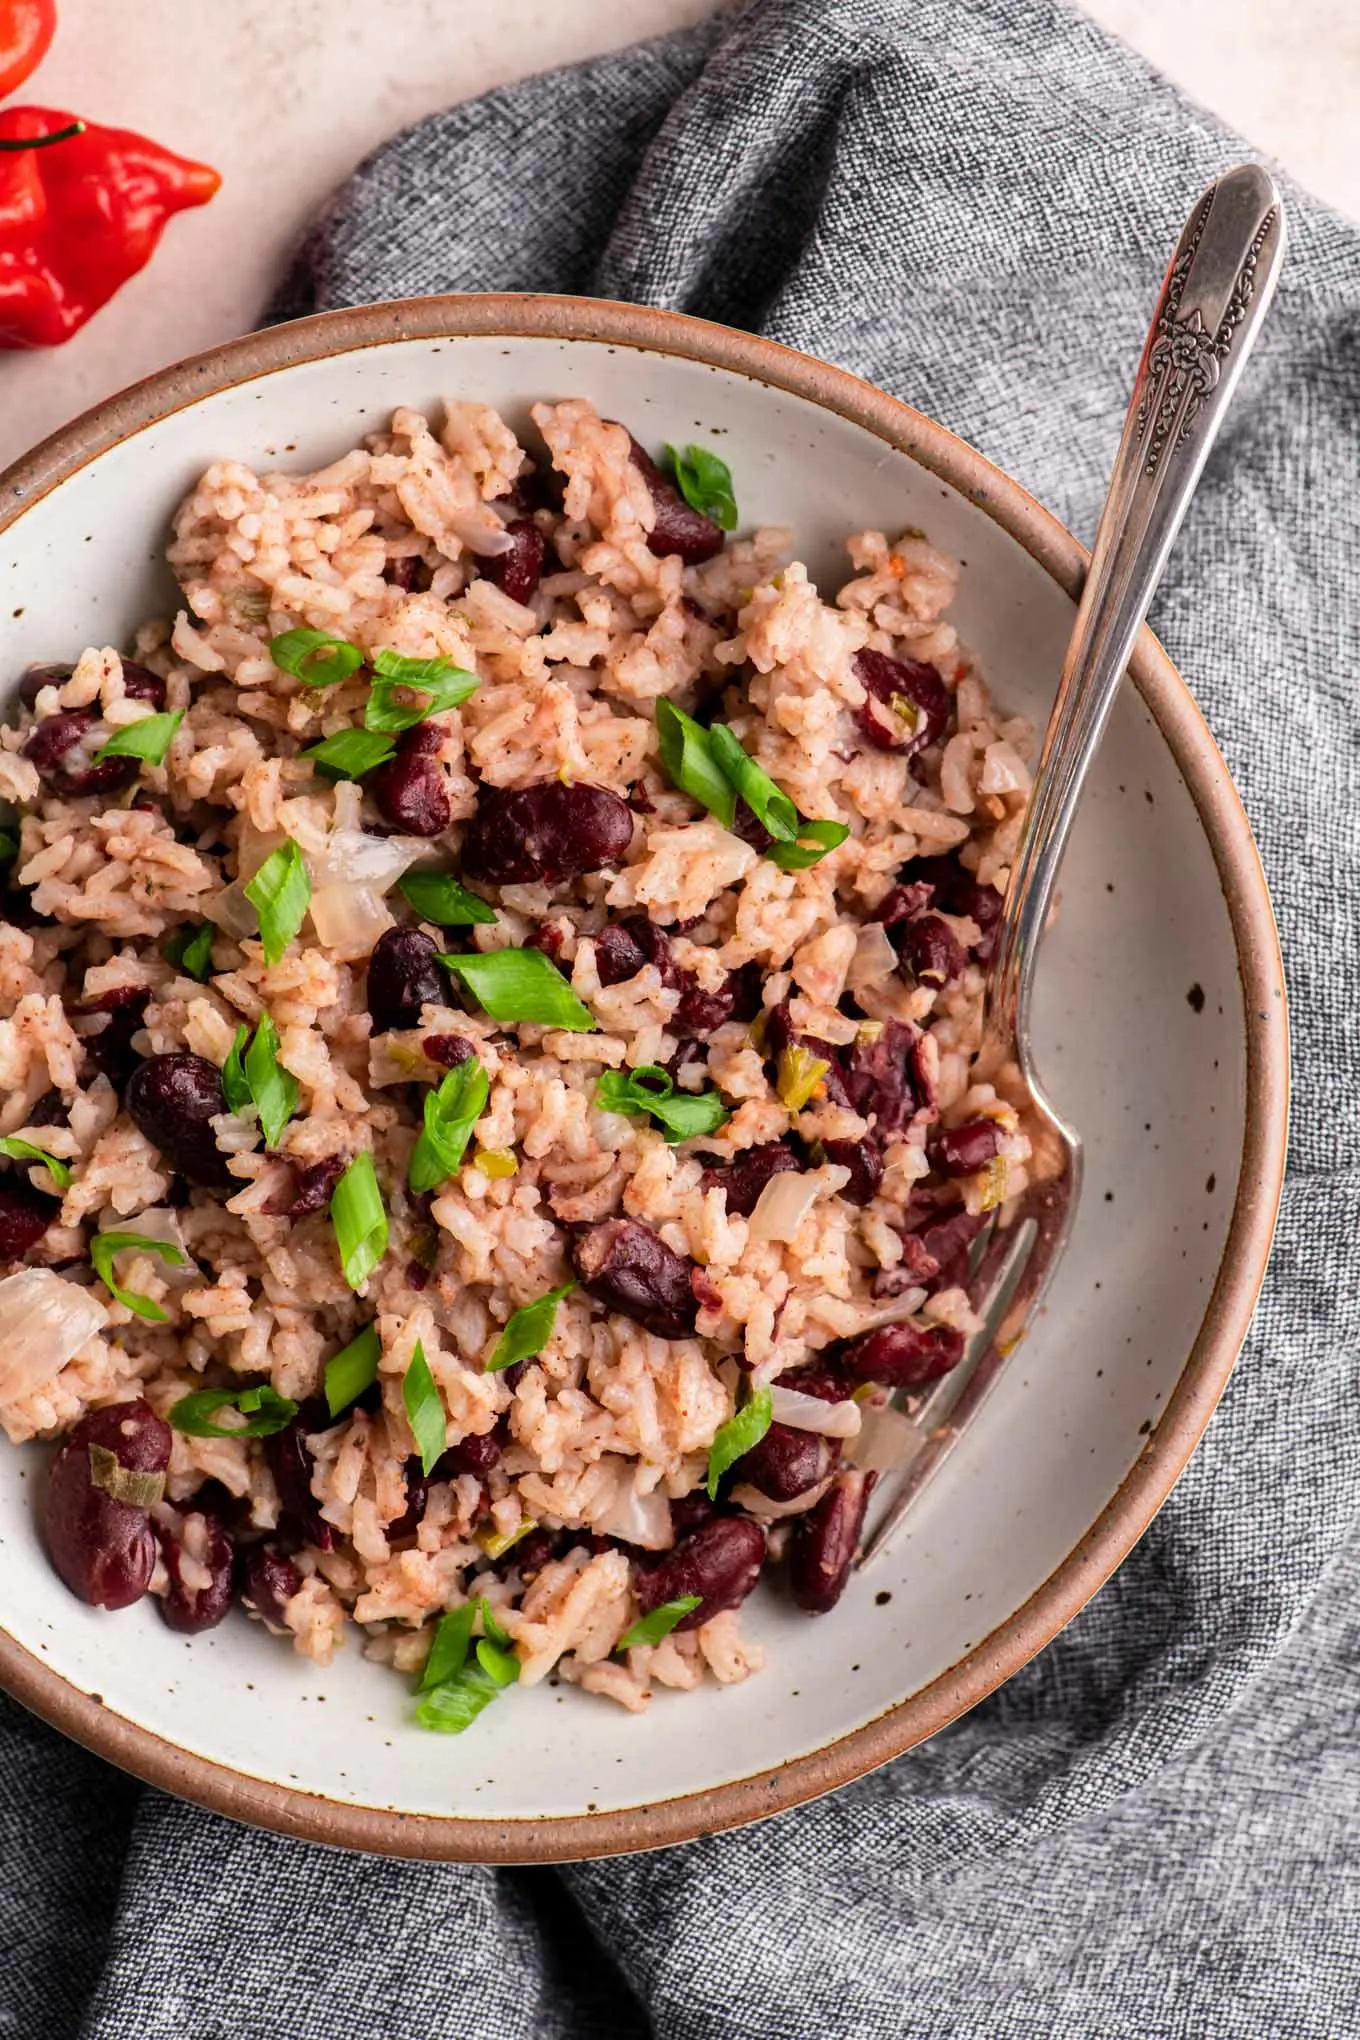 Zatarain's Red Beans & Rice: Calories, Nutrition Analysis & More